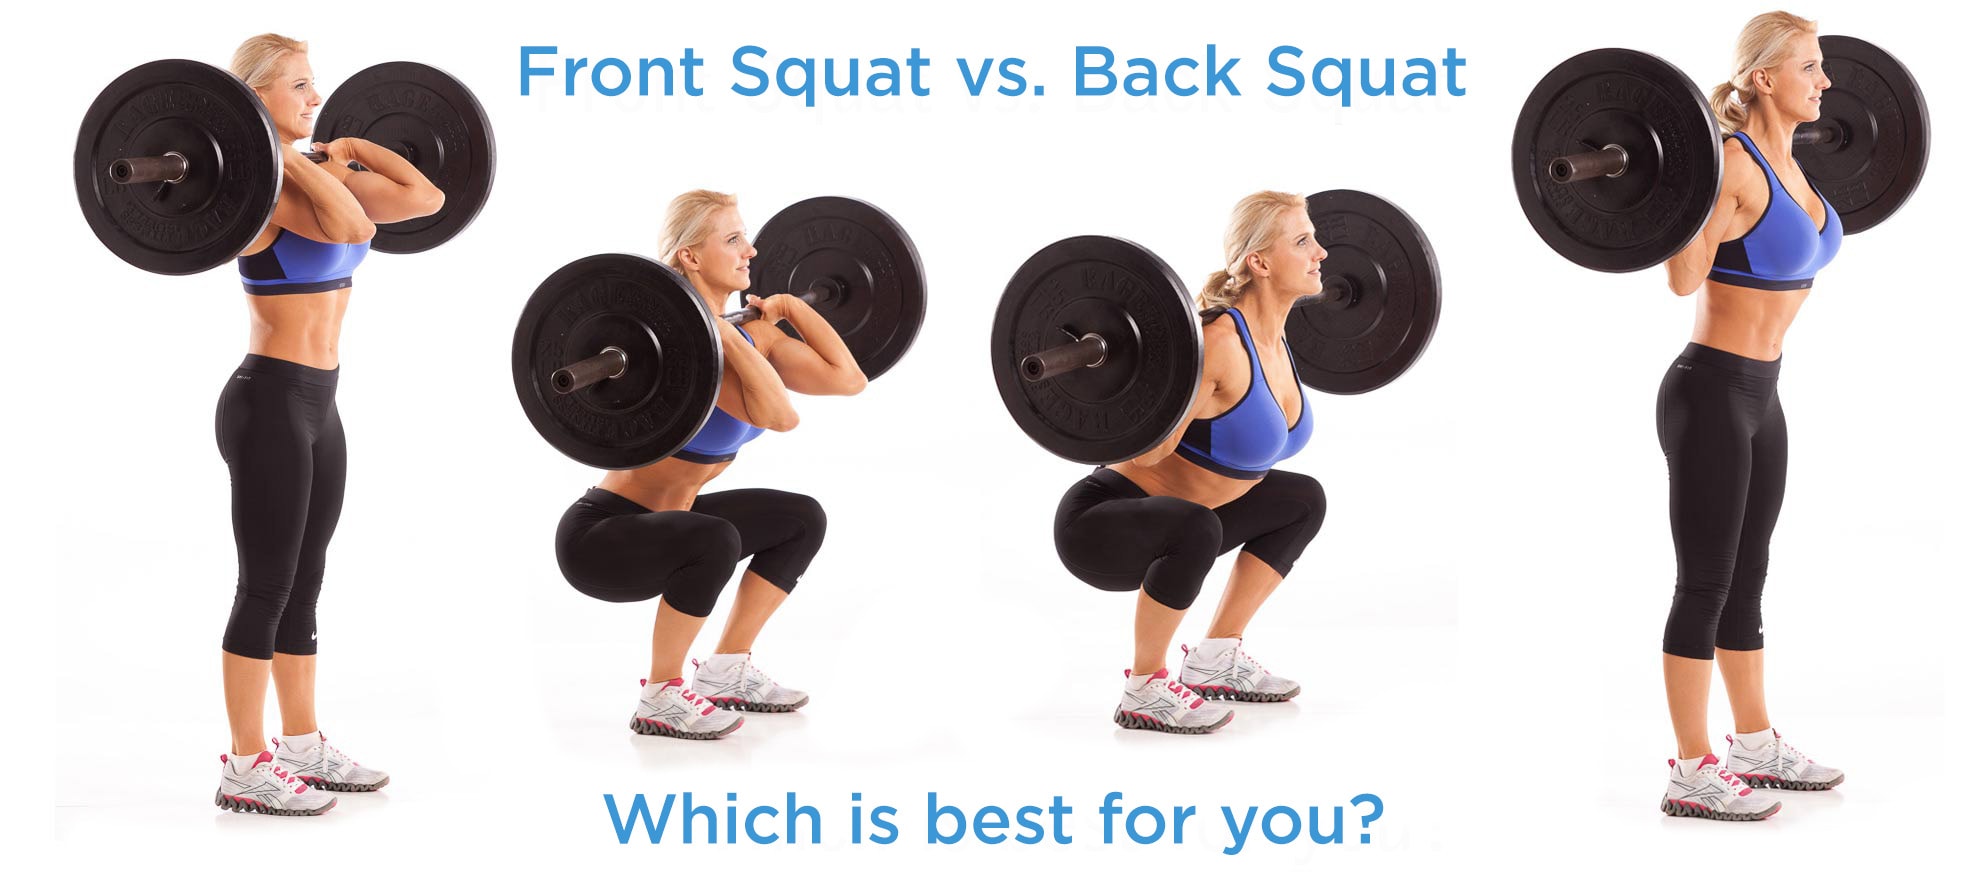 Front Squat versus Back Squat